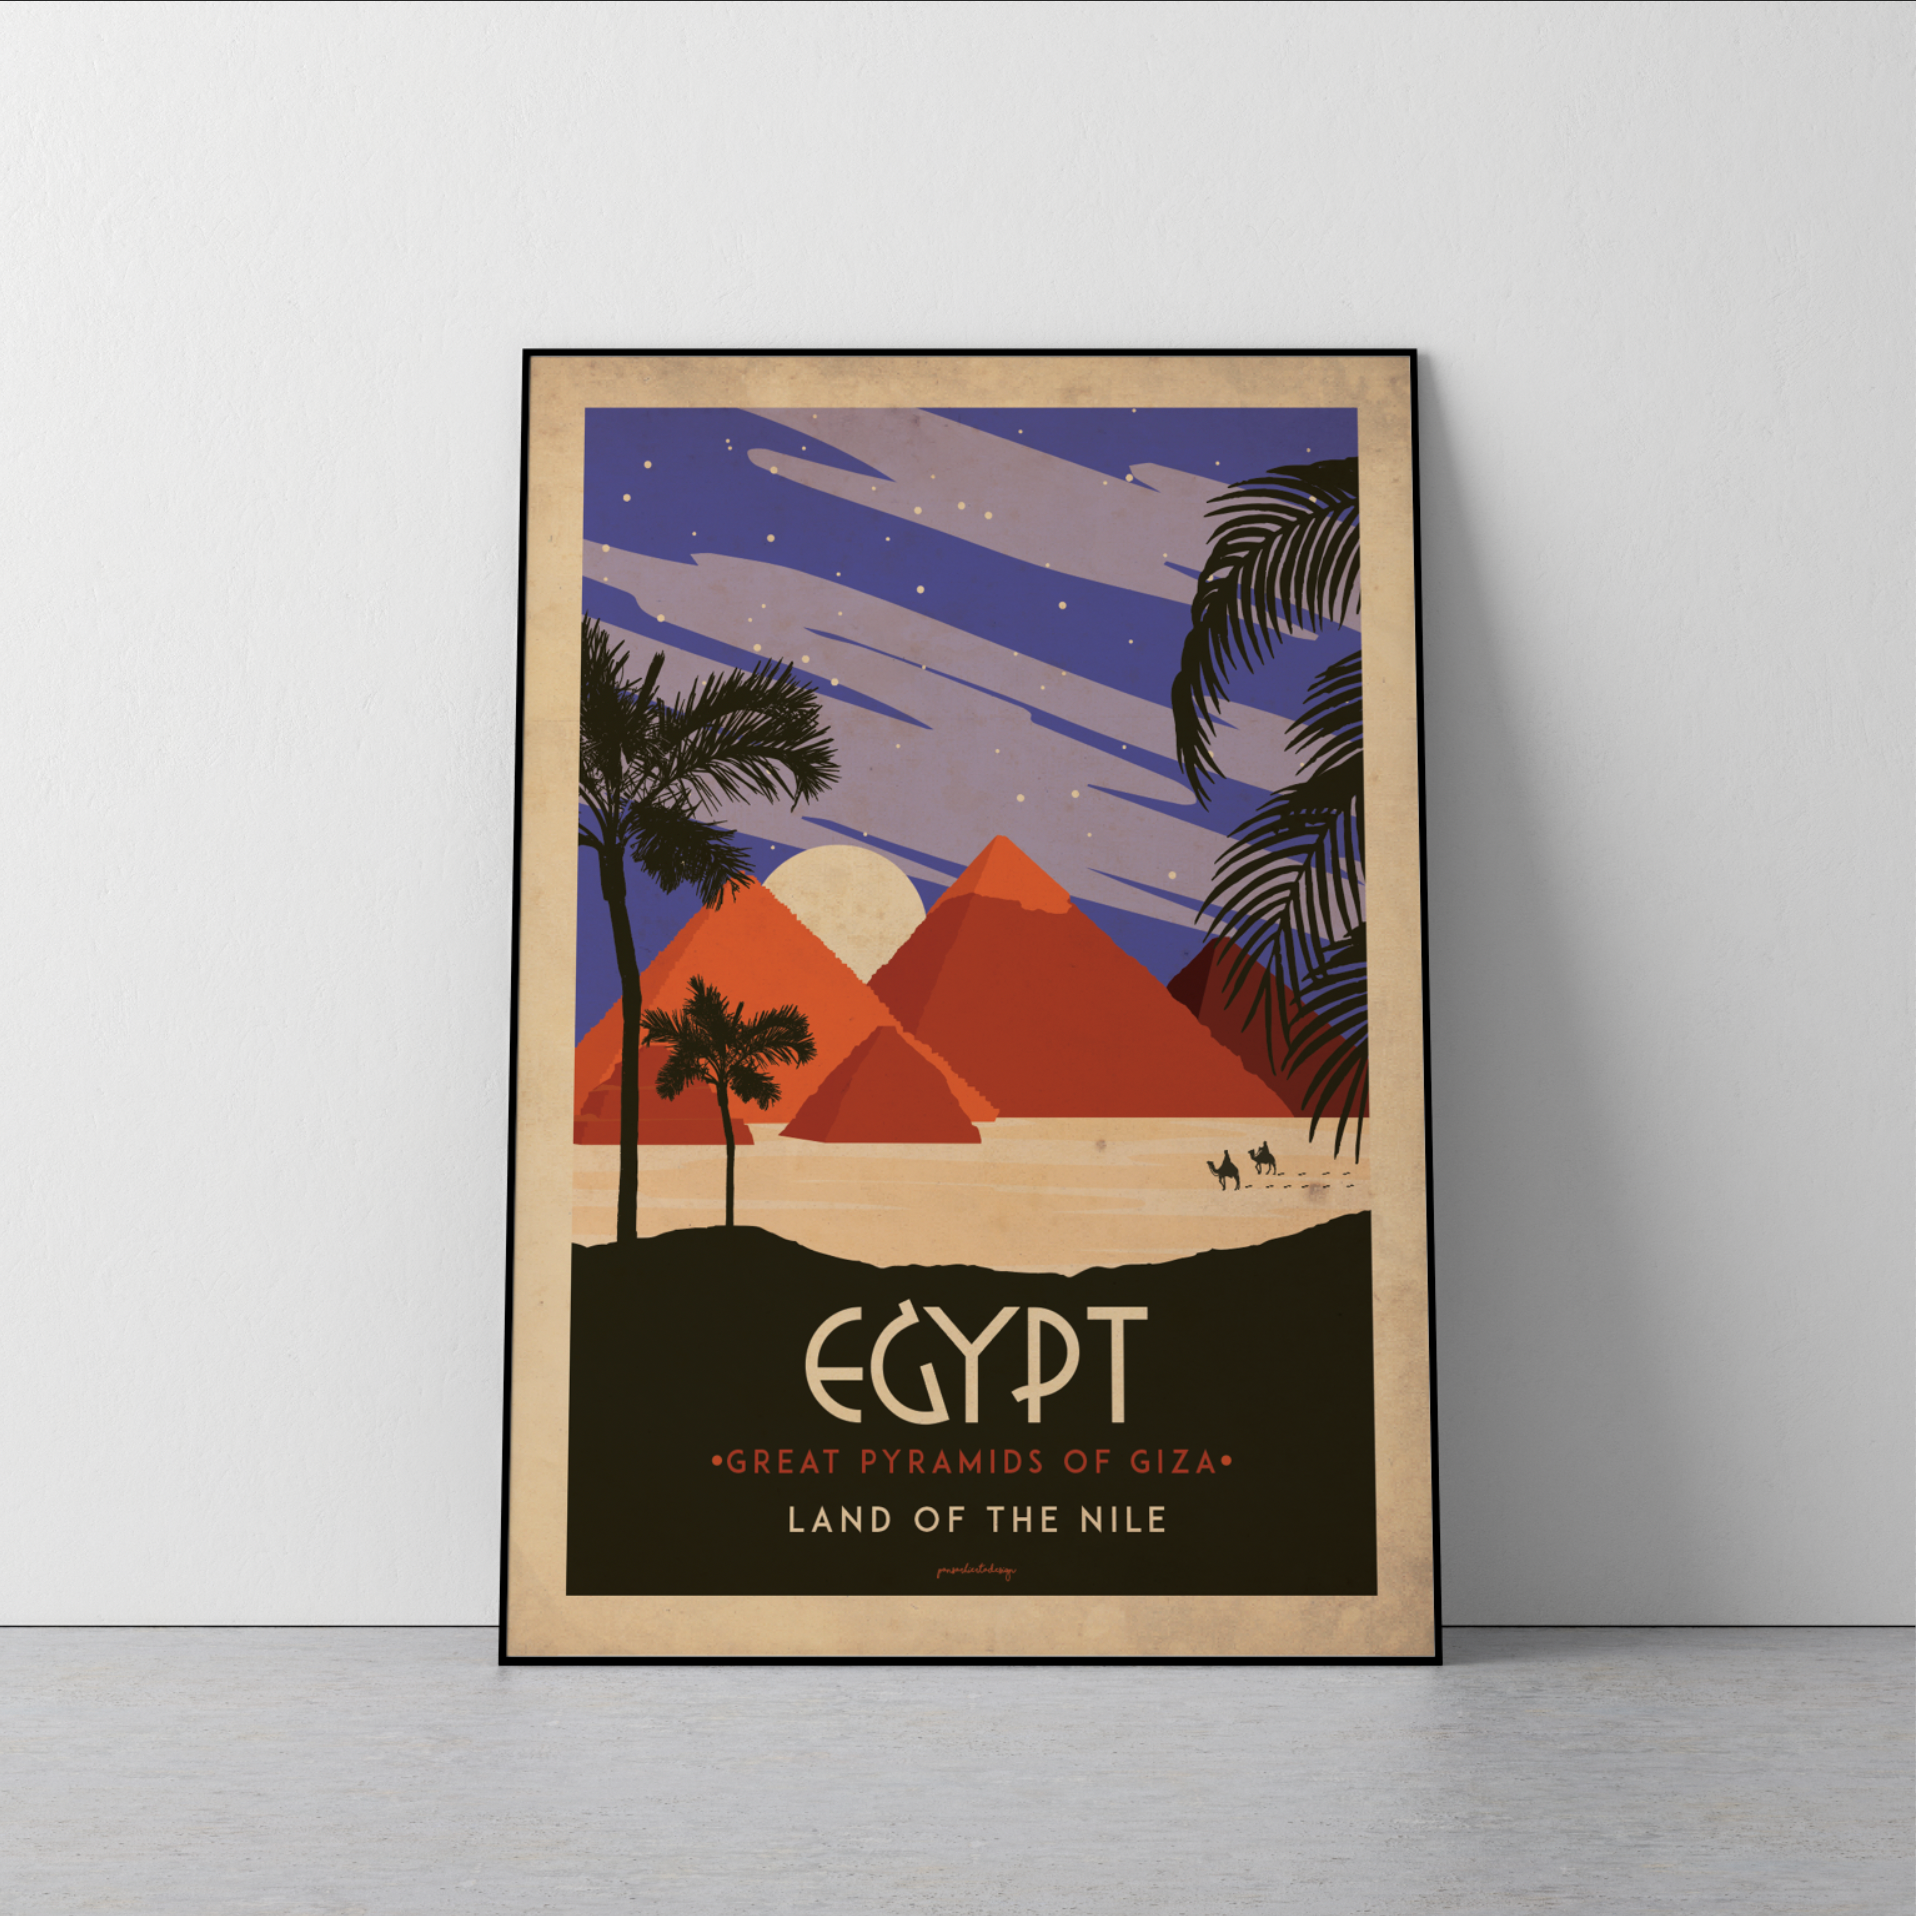 Art deco - Egypt - World collection